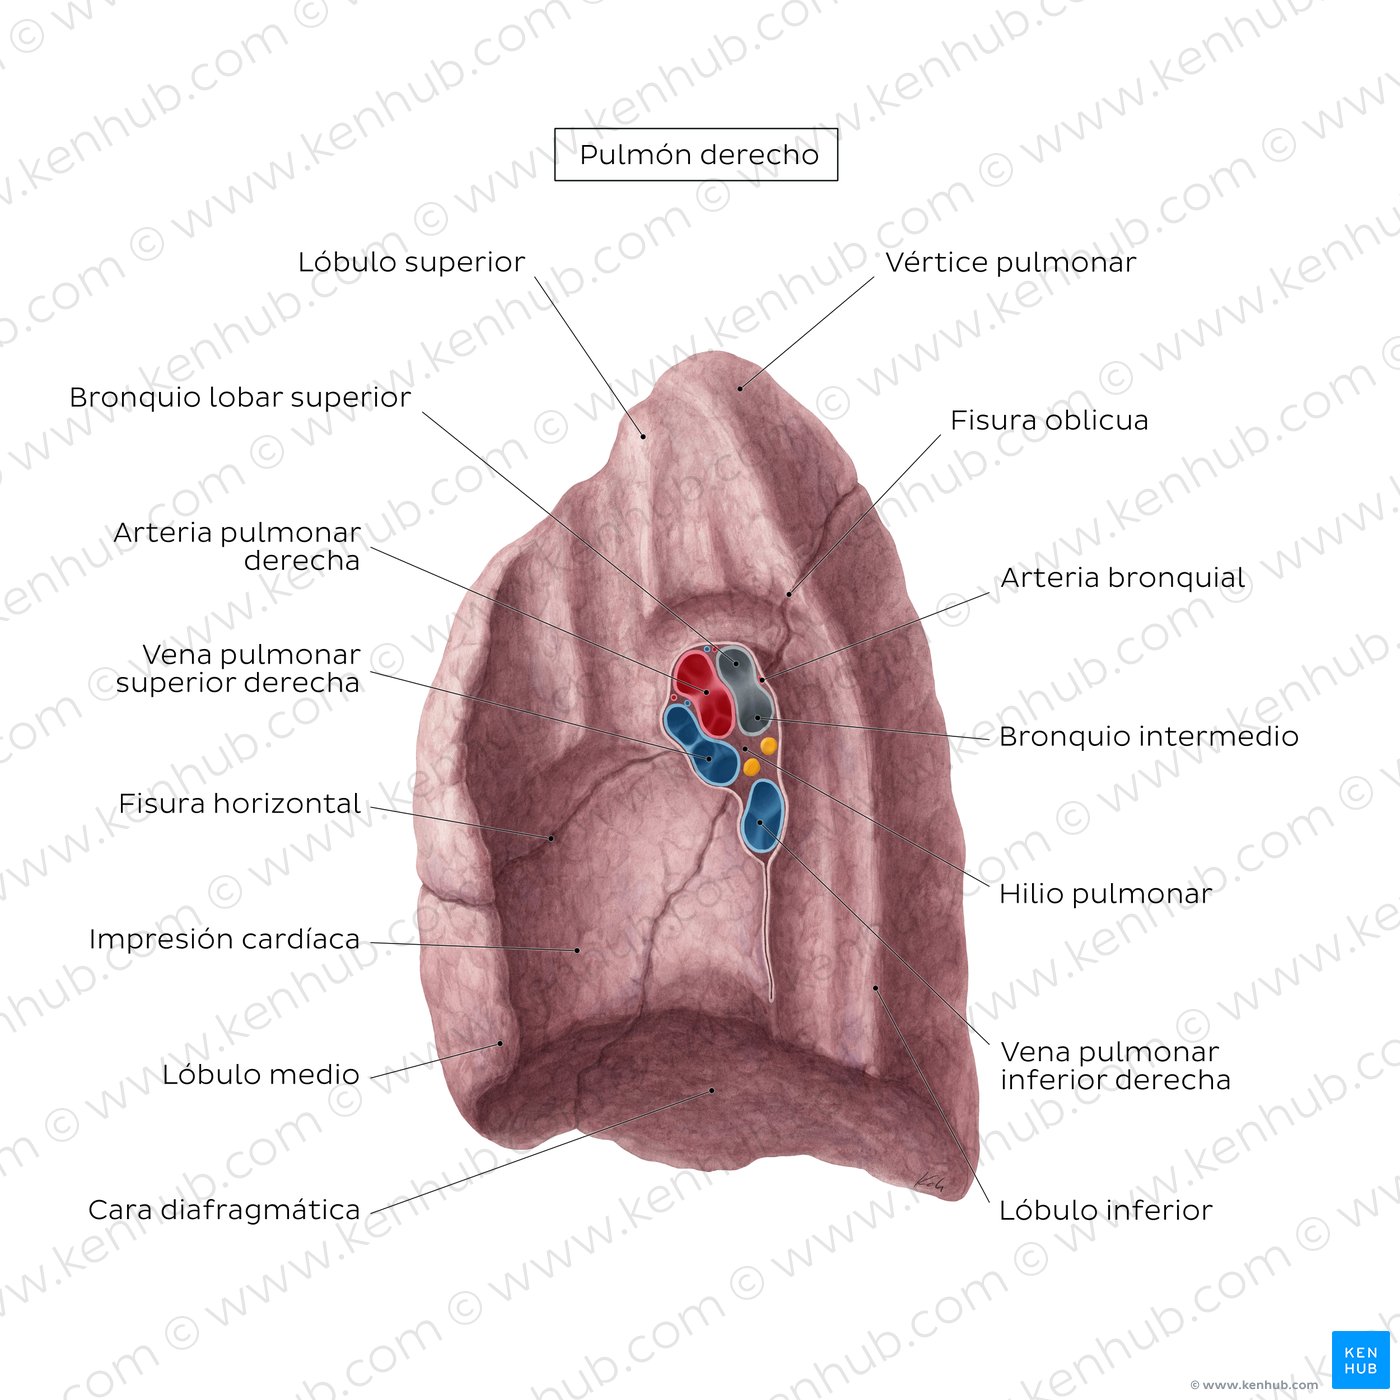 Vista medial del pulmón derecho